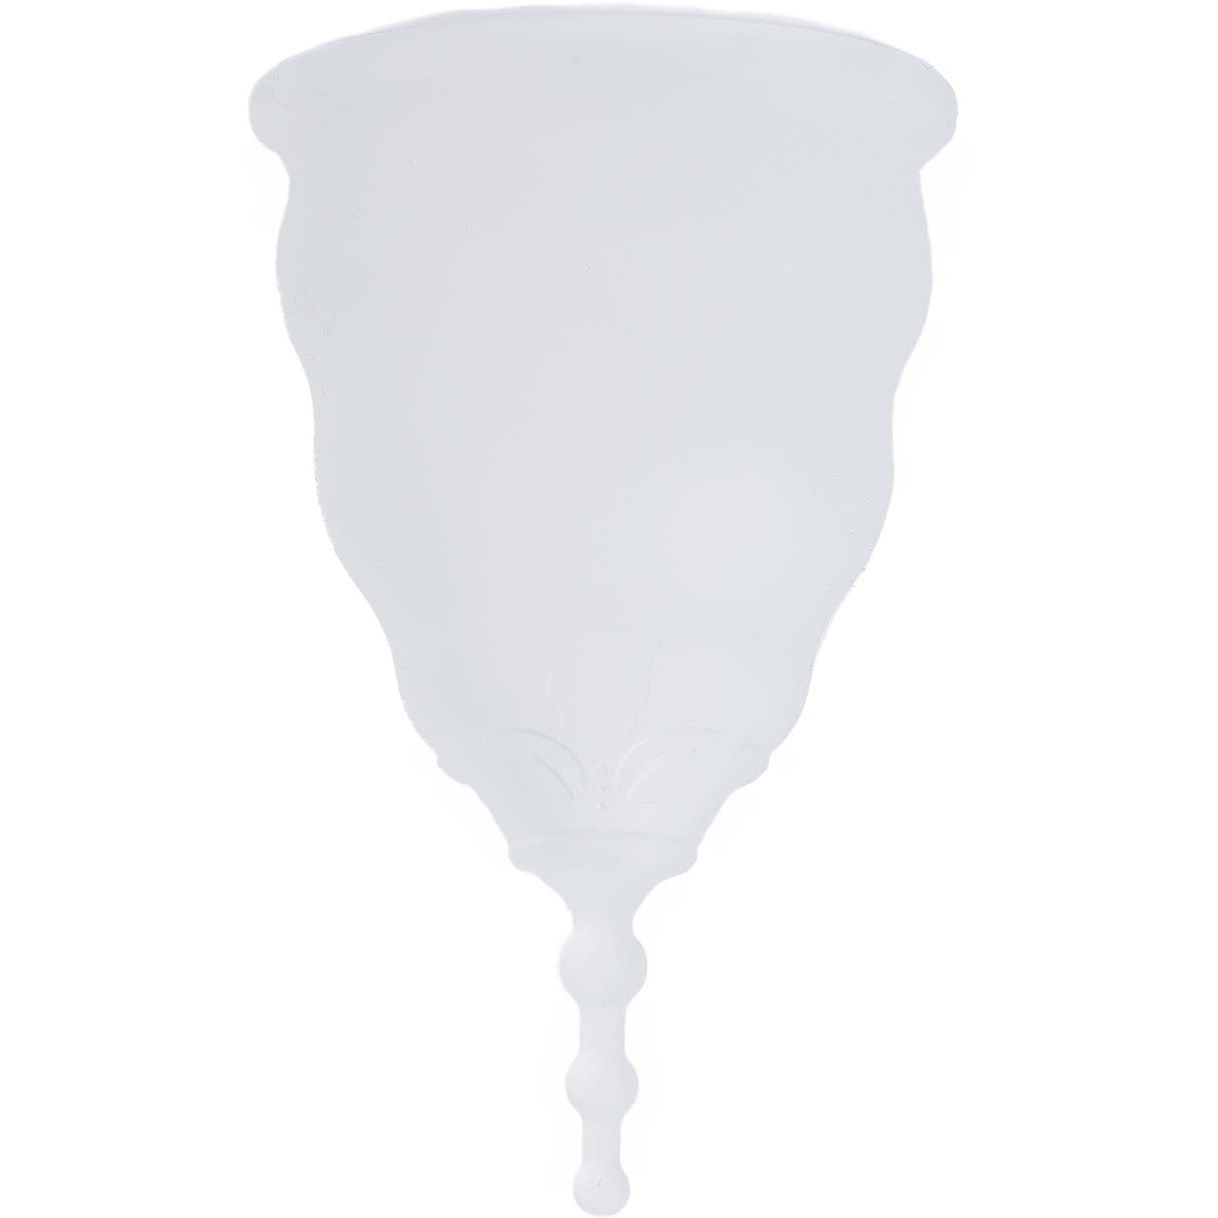 Bilde av Cleancup Menstrual Cup Firm Large